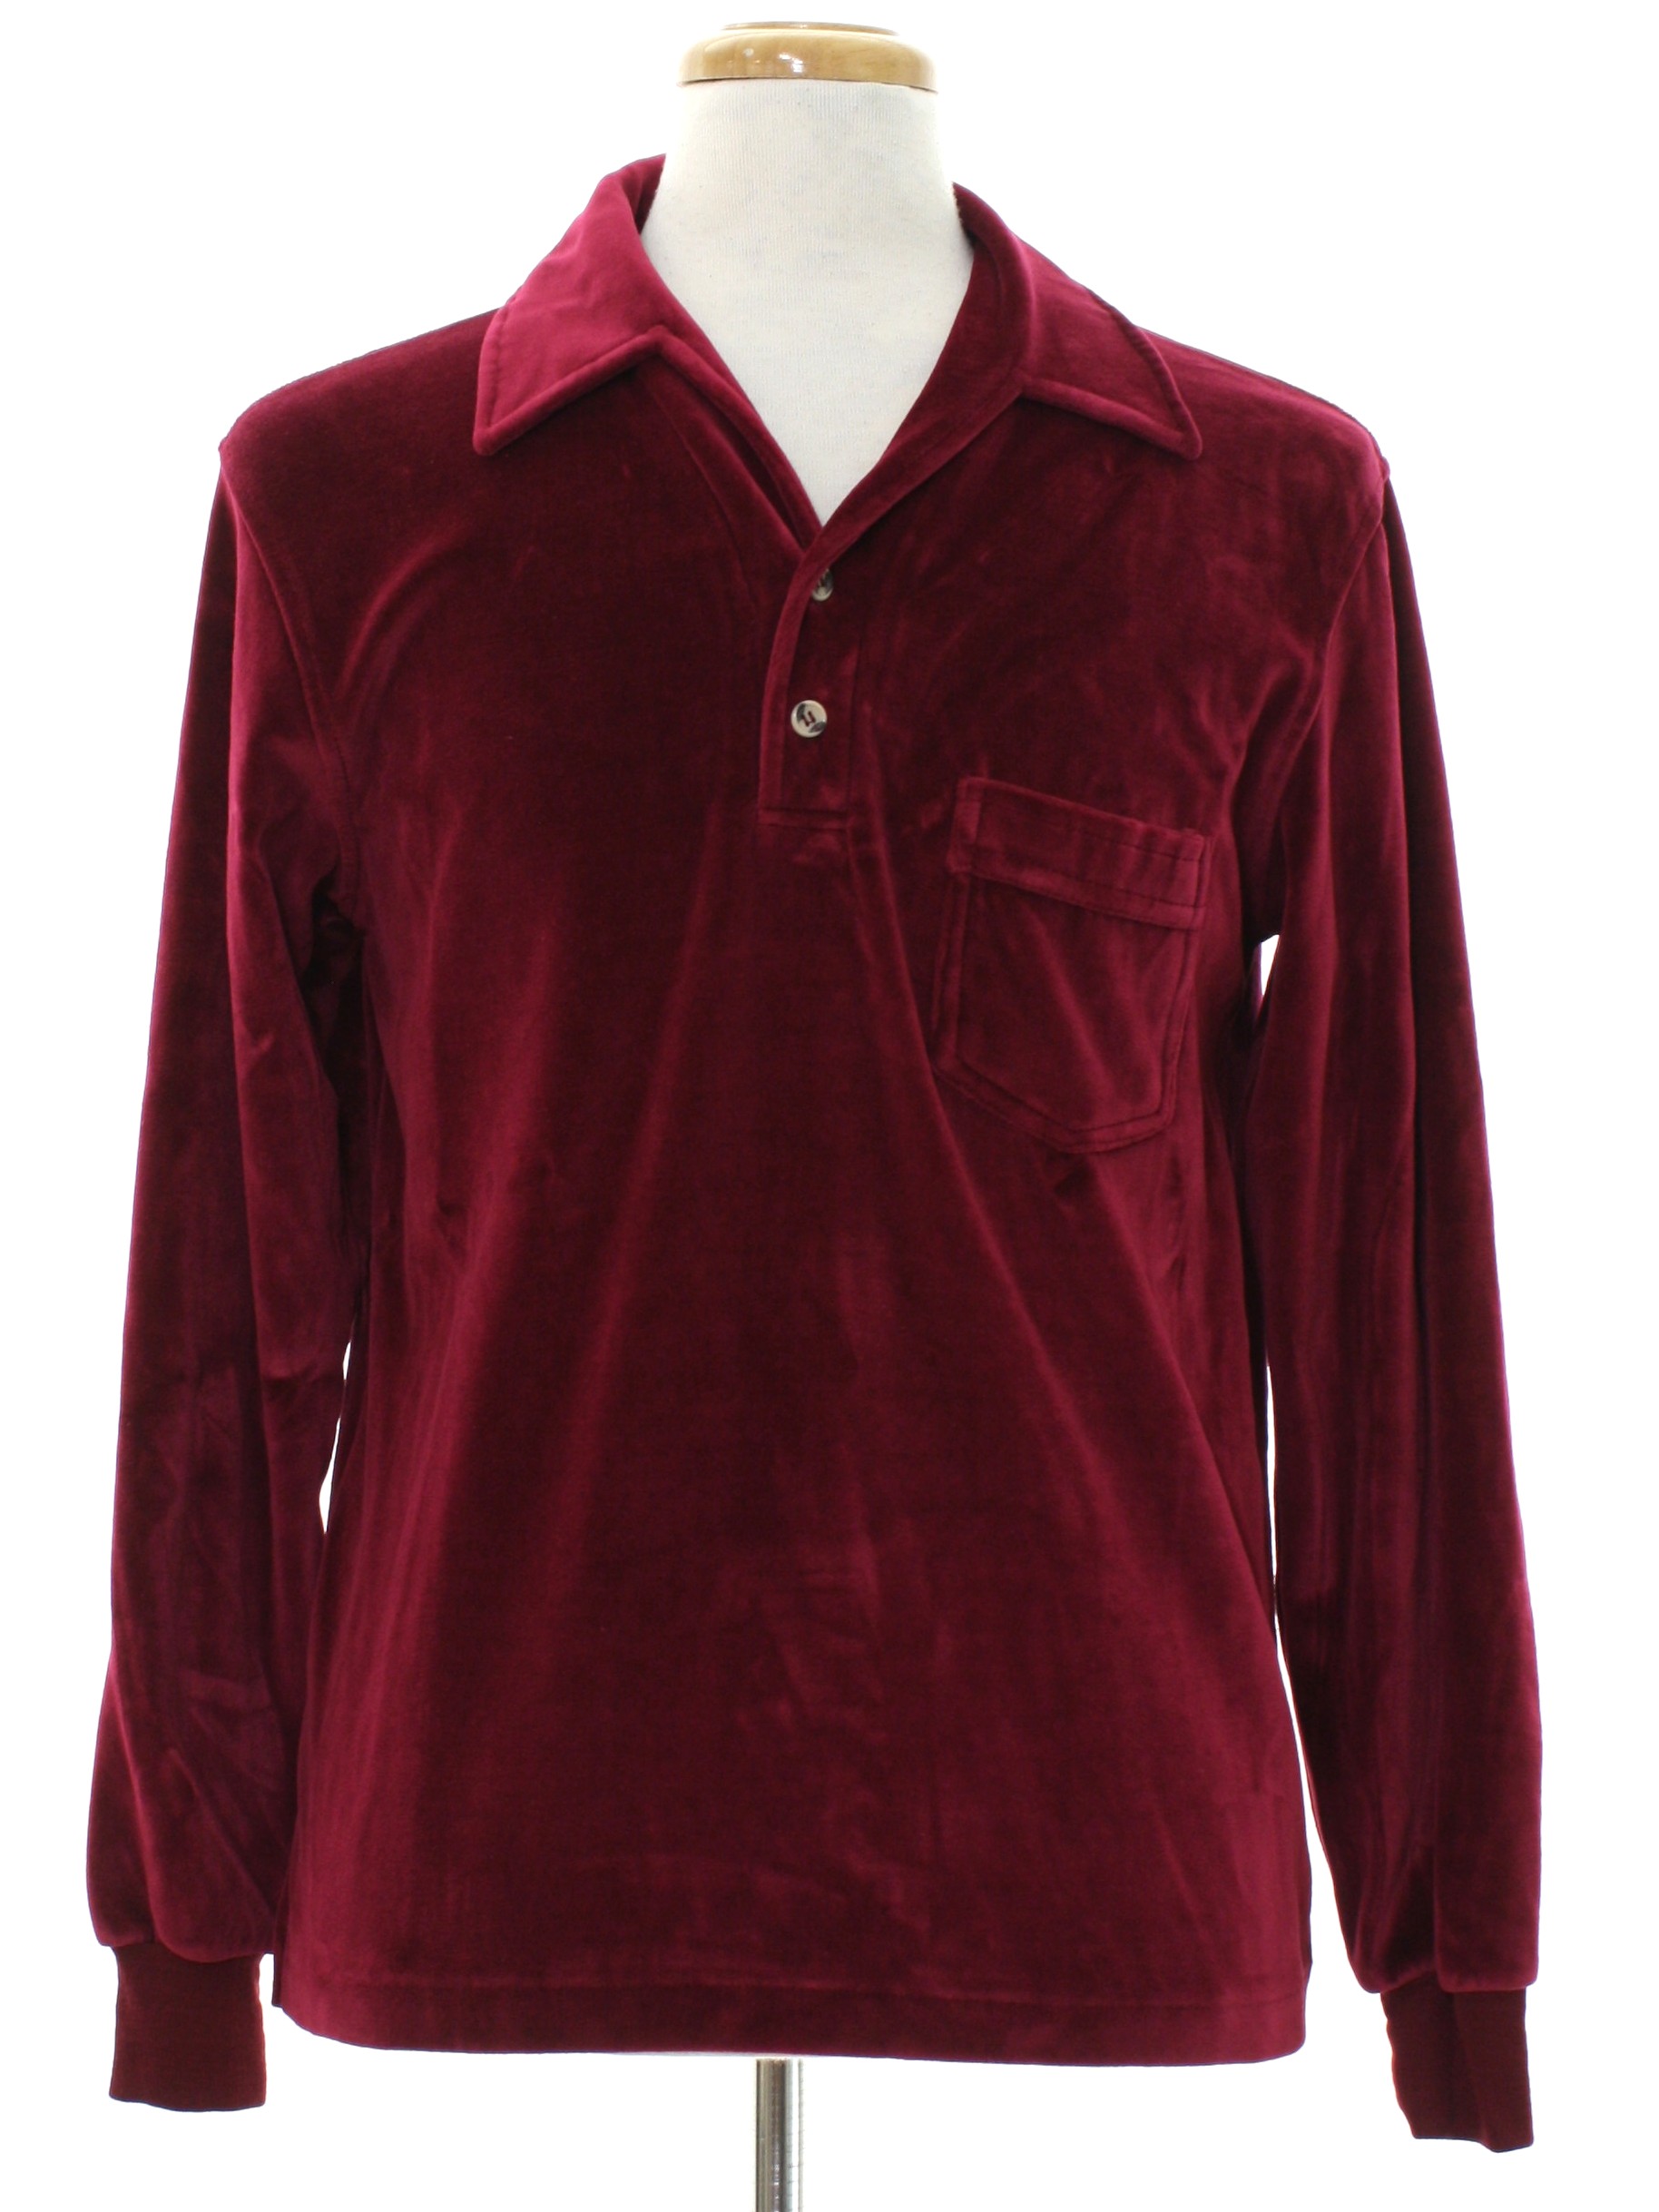 Retro 70s Velour Shirt (Mervyns) : Late 70s -Mervyns- Mens wine red ...